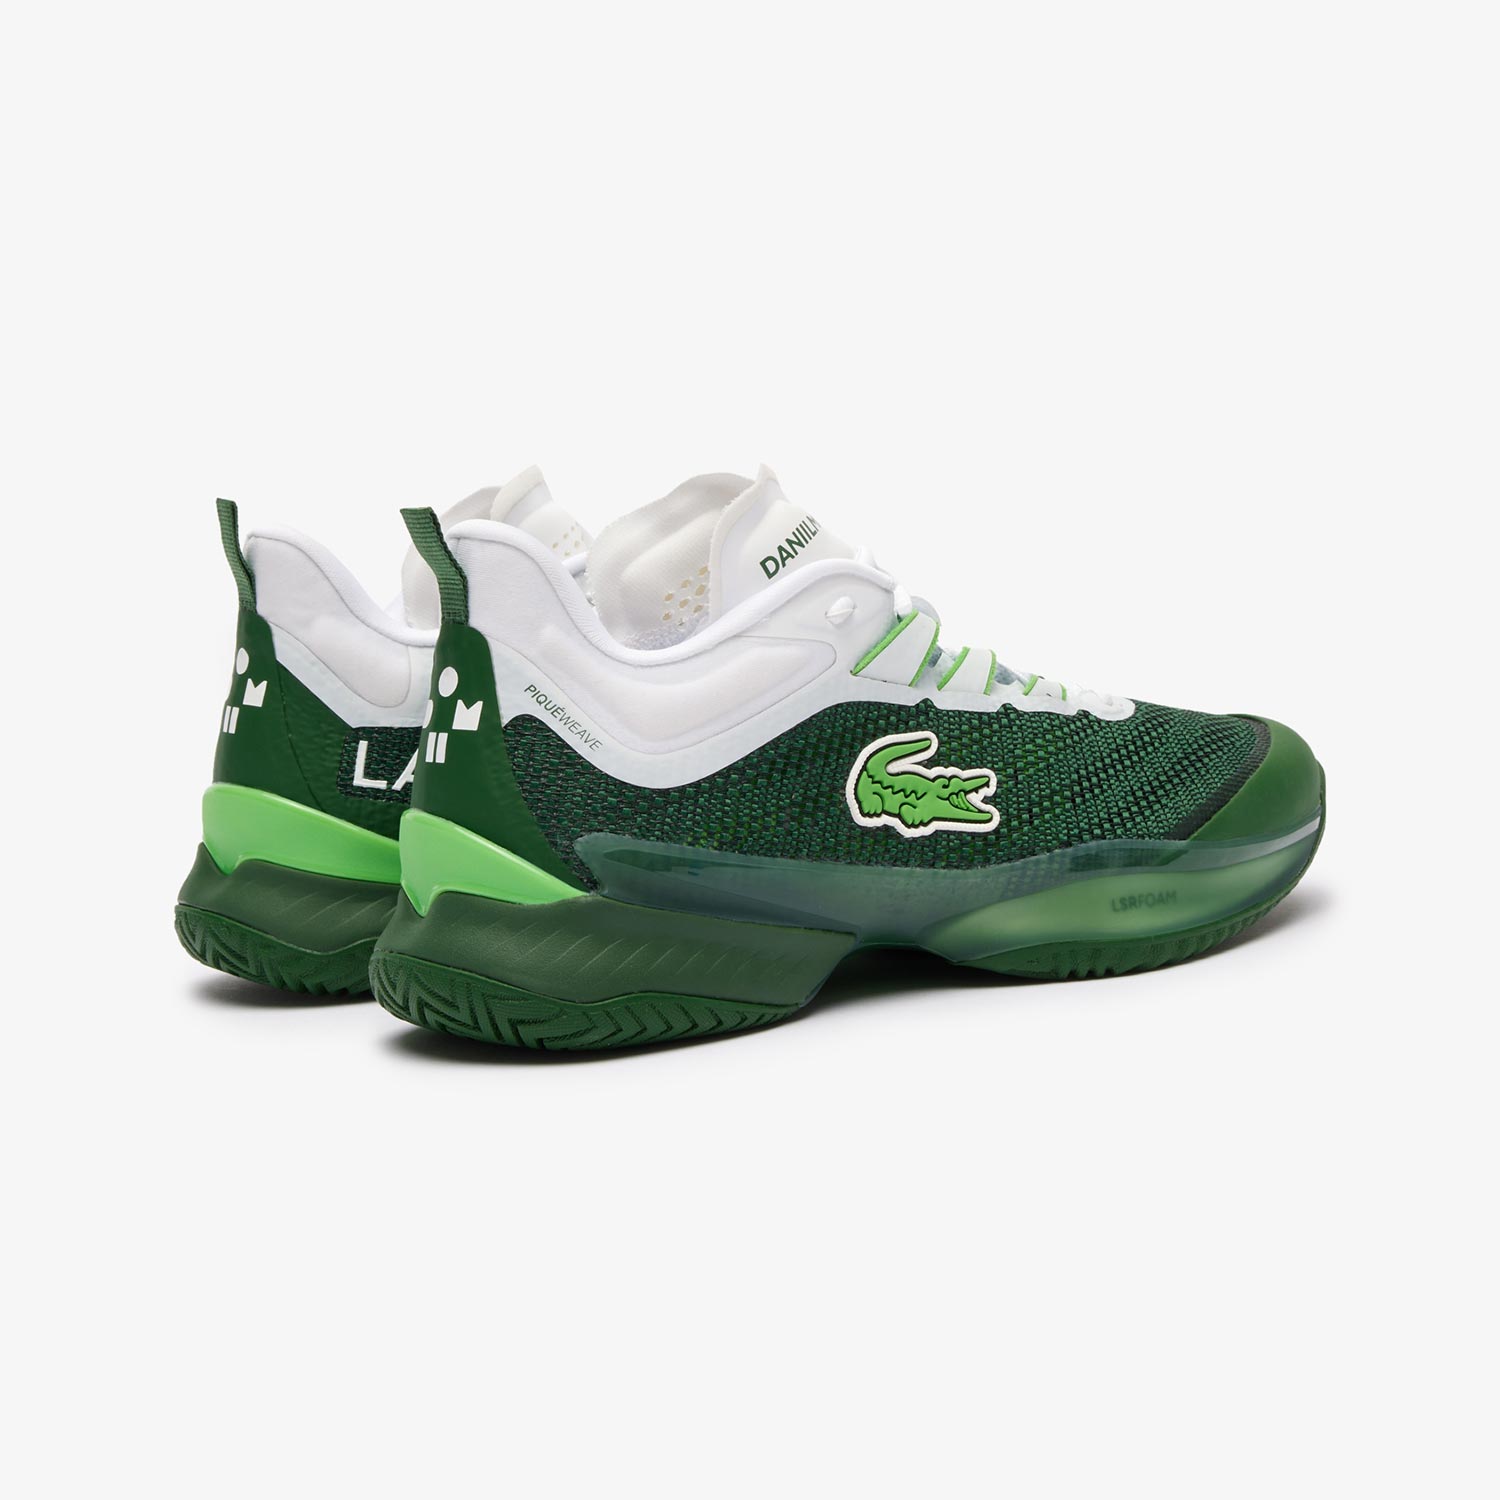 Lacoste AG-LT23 Ultra Men's Tennis Shoes - Green (4)